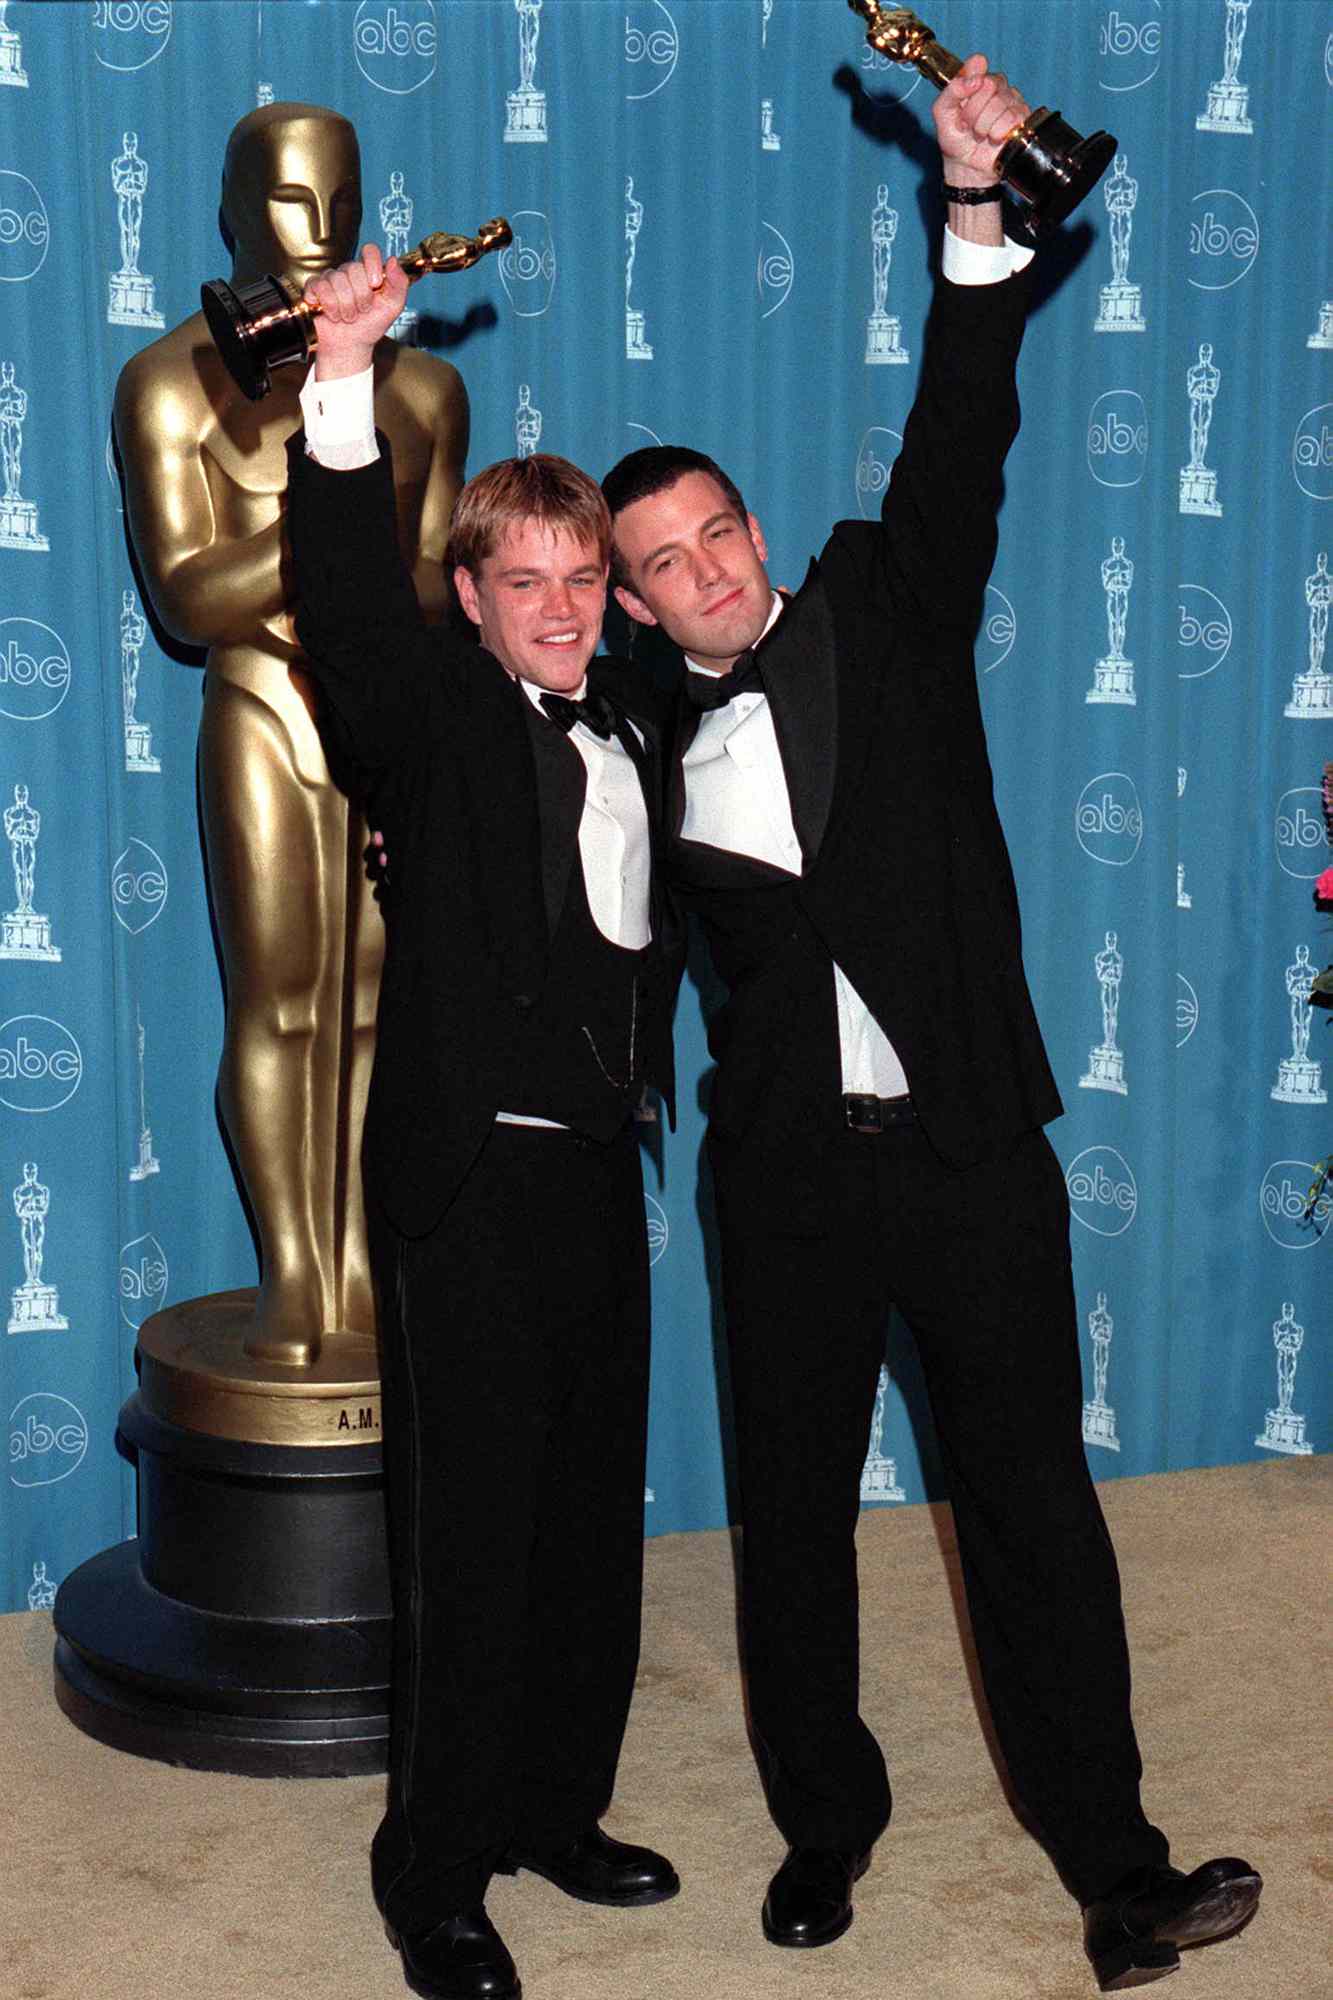 70th Annual Academy Awards - Press Room